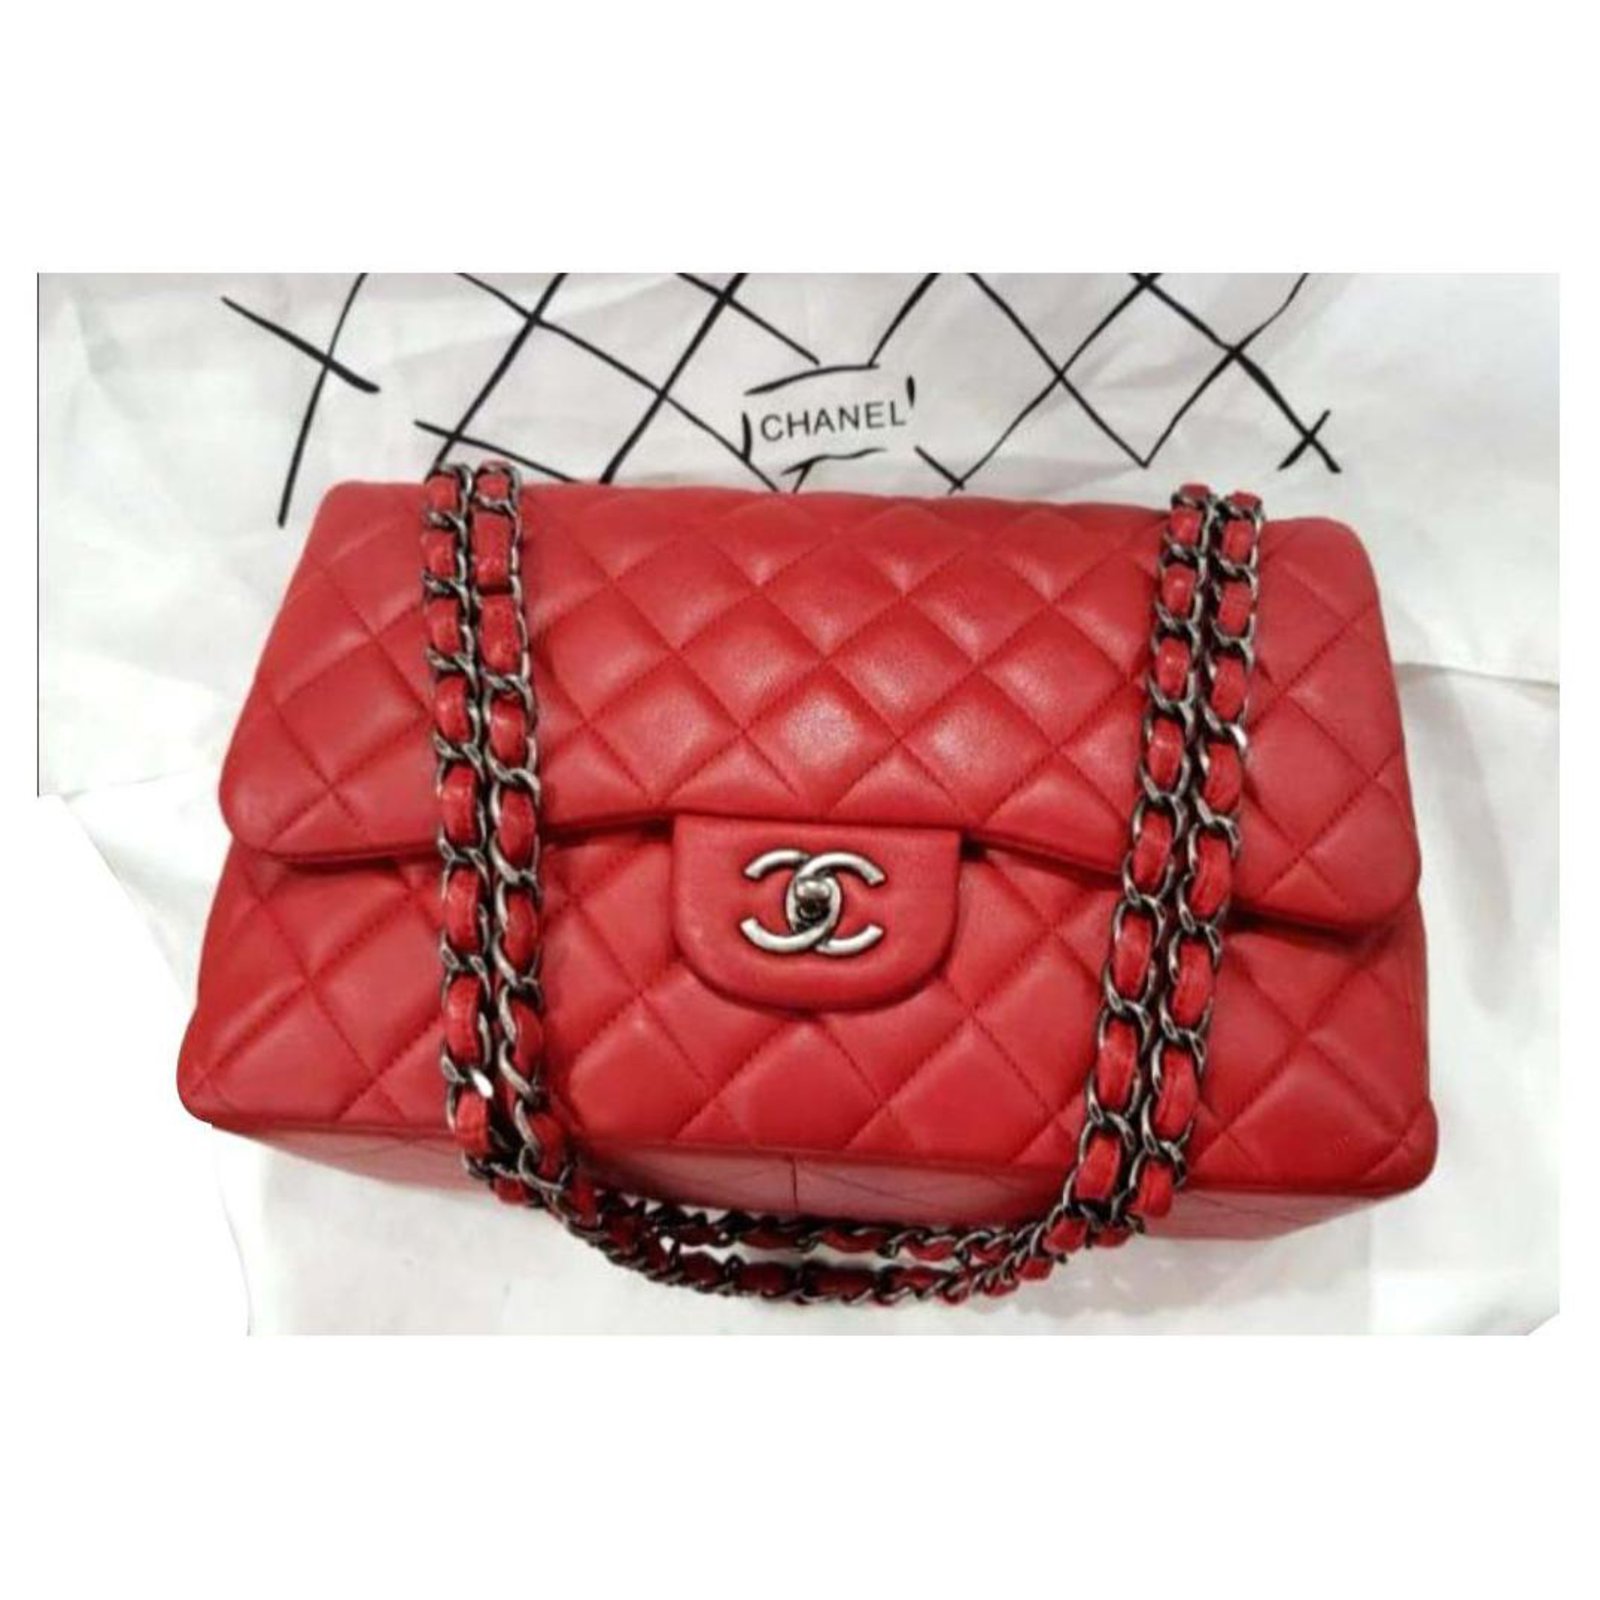 Chanel jumbo bag red  Red chanel, Chanel jumbo red, Chanel bag red